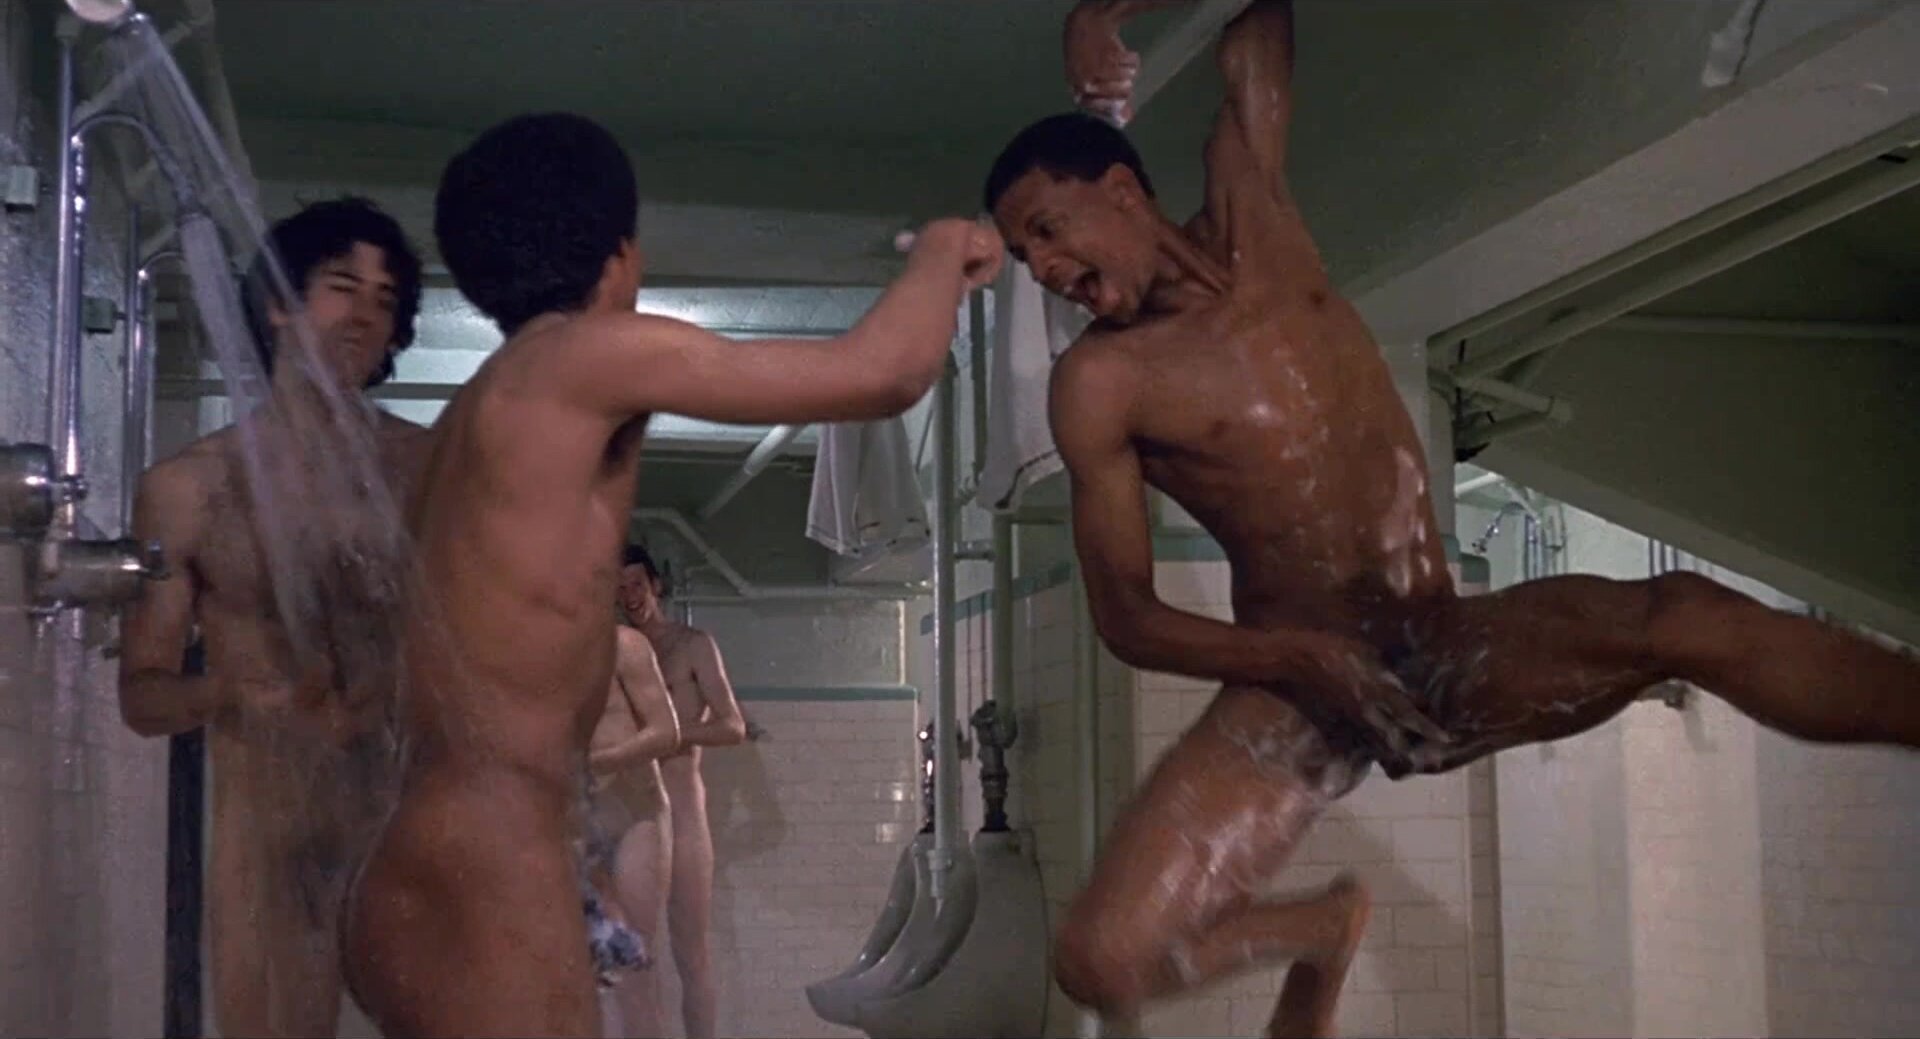 Black Nude Athletes Shower